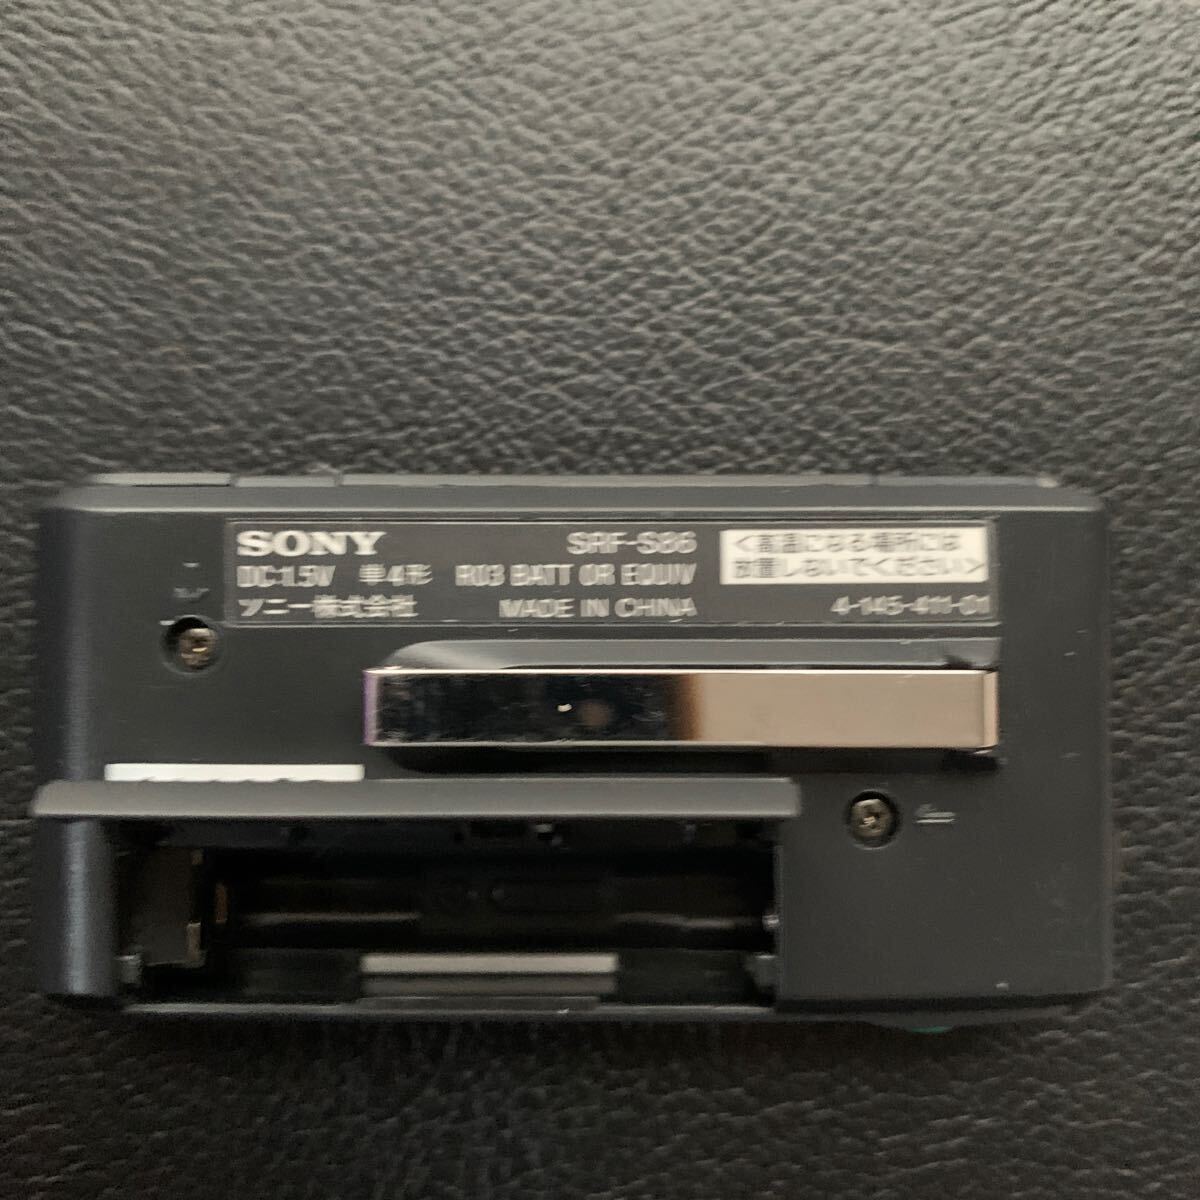 SONY 小型ポケットラジオ SRF-S86 中古品_画像4